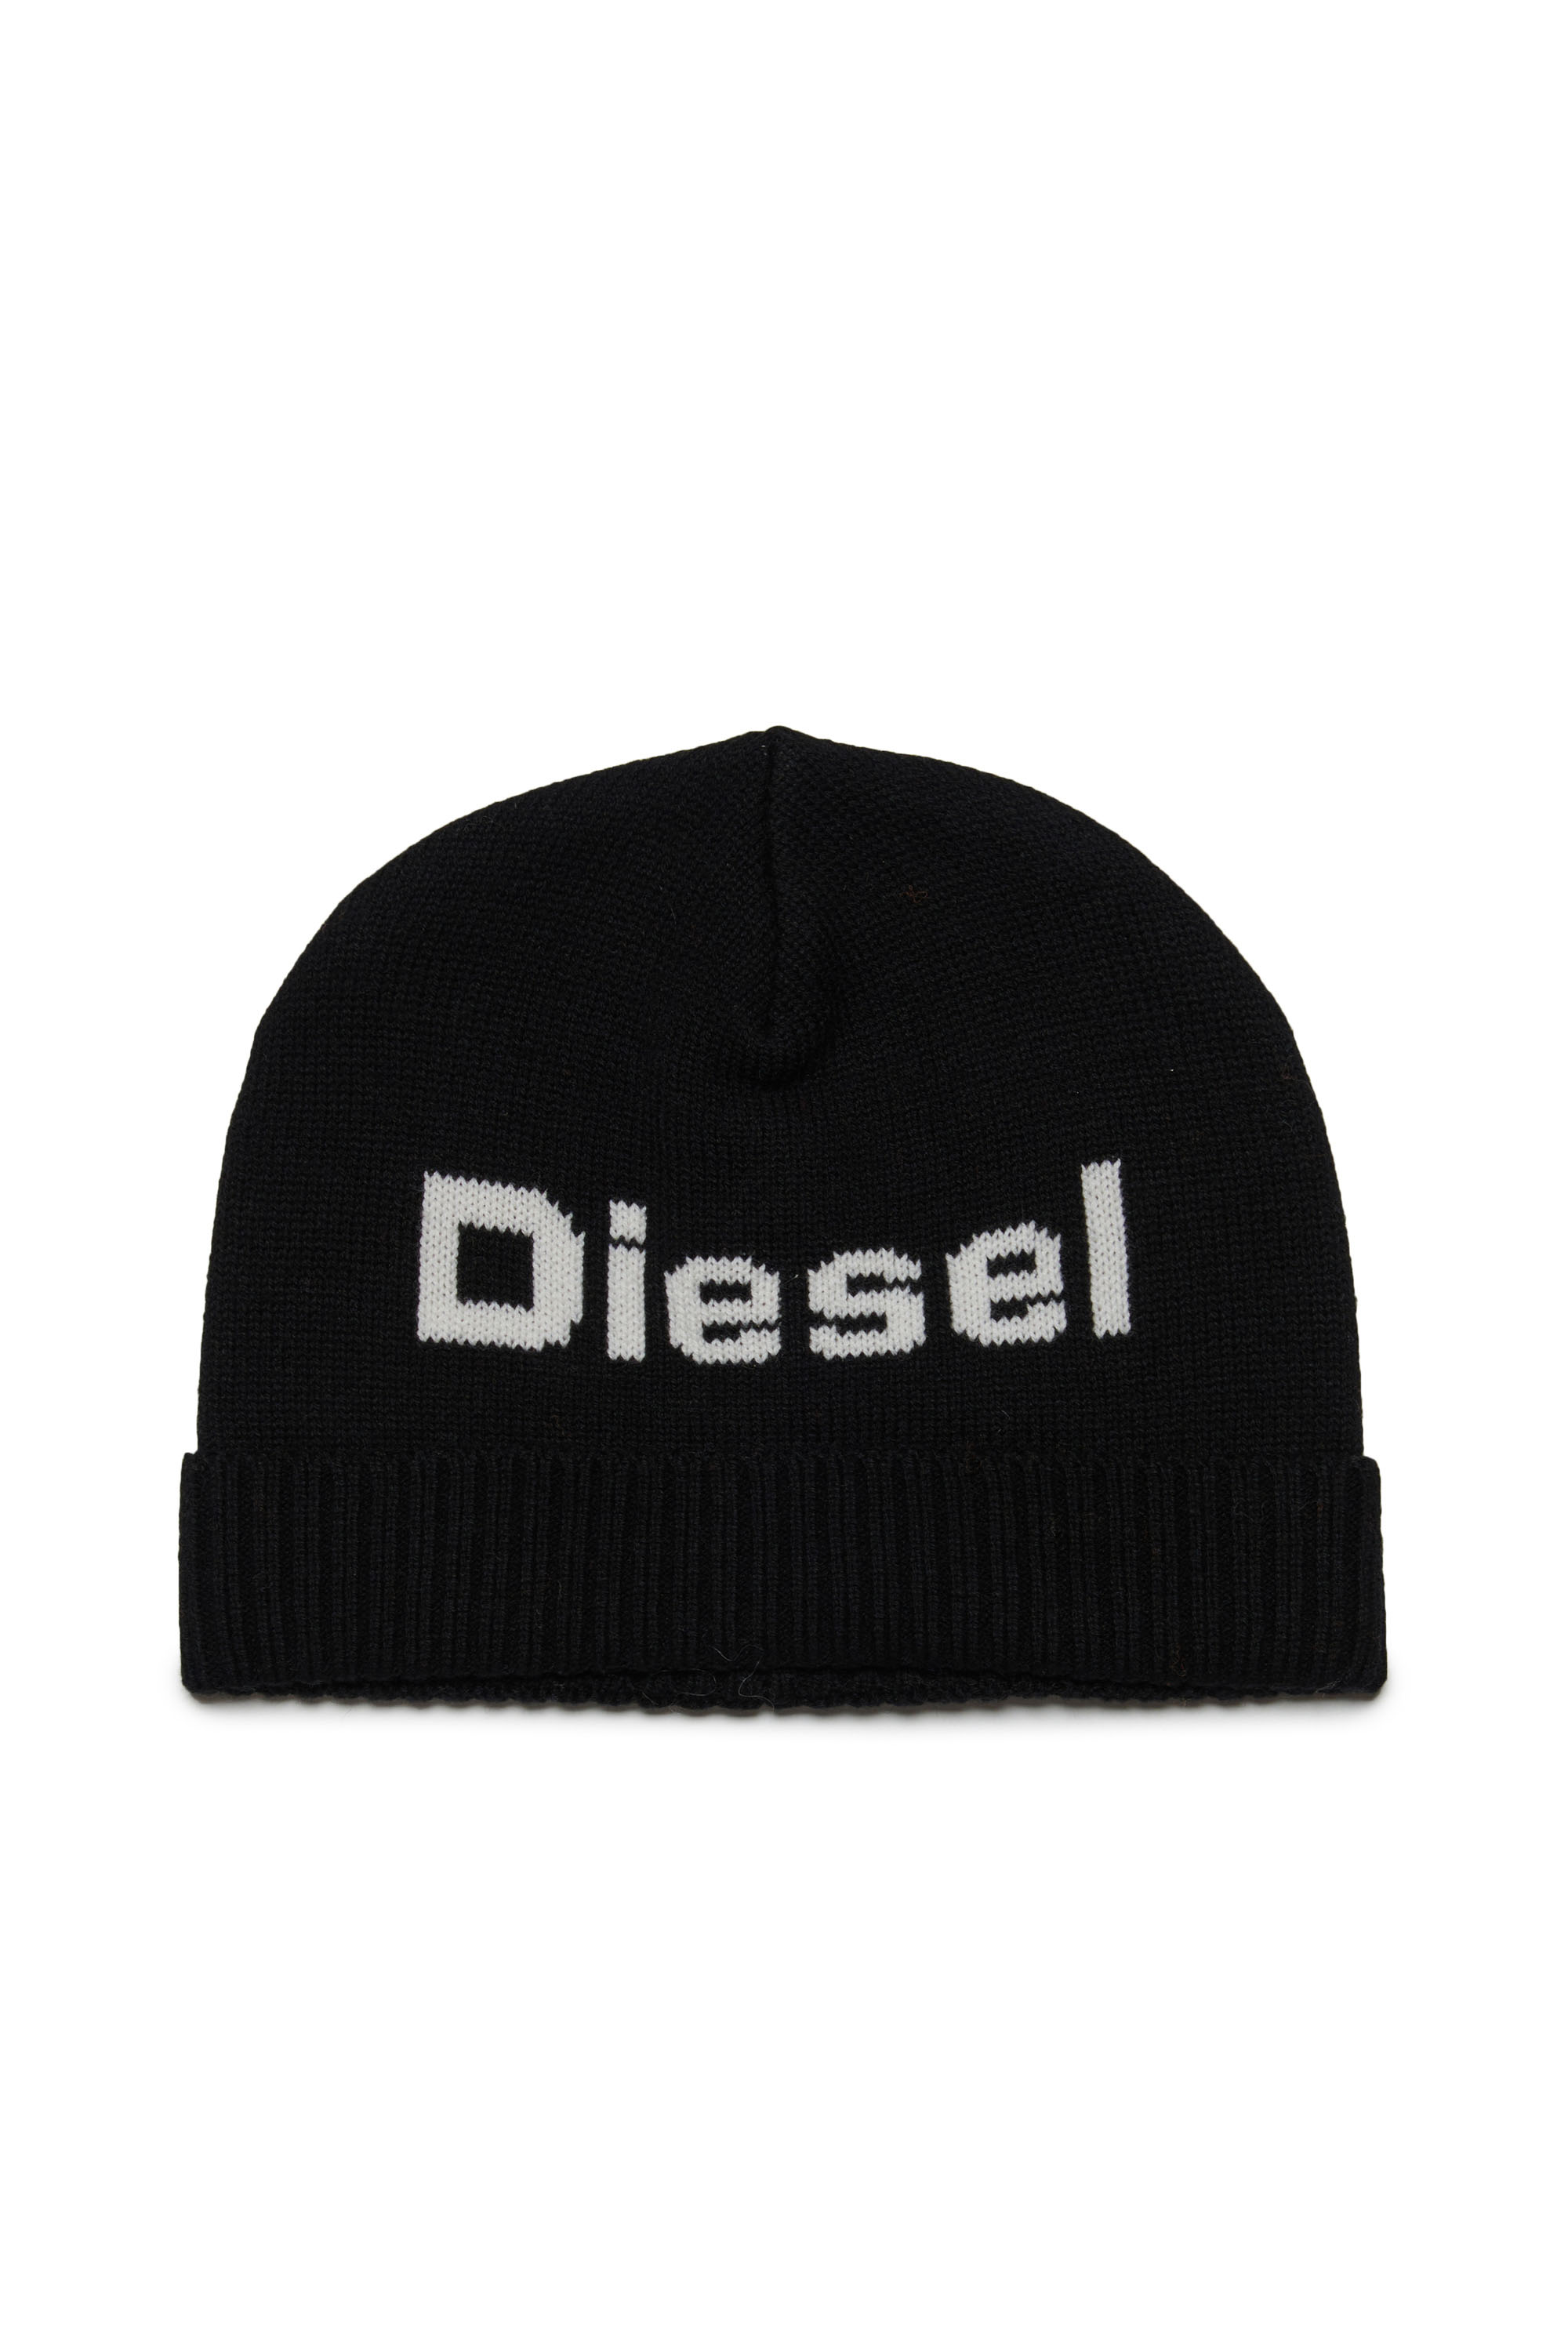 Diesel - FCOSEL-SKI, Black - Image 1